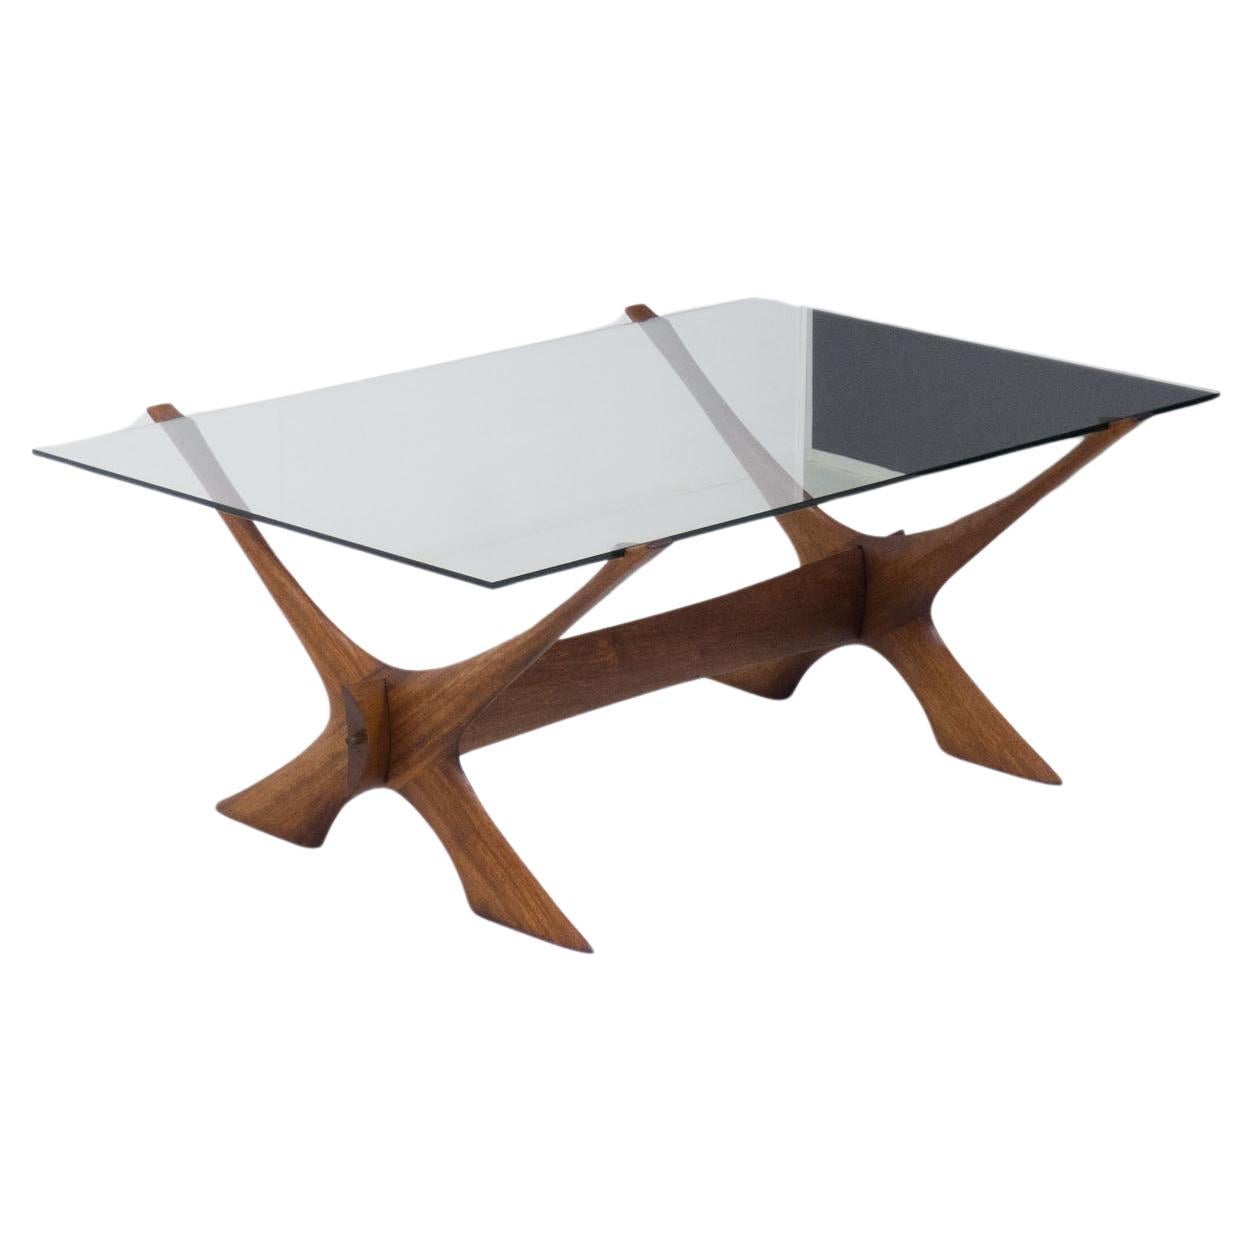 Örebro Glas ‘Condor’ walnut & glass coffee table – Fredrik Schriever-Abeln For Sale